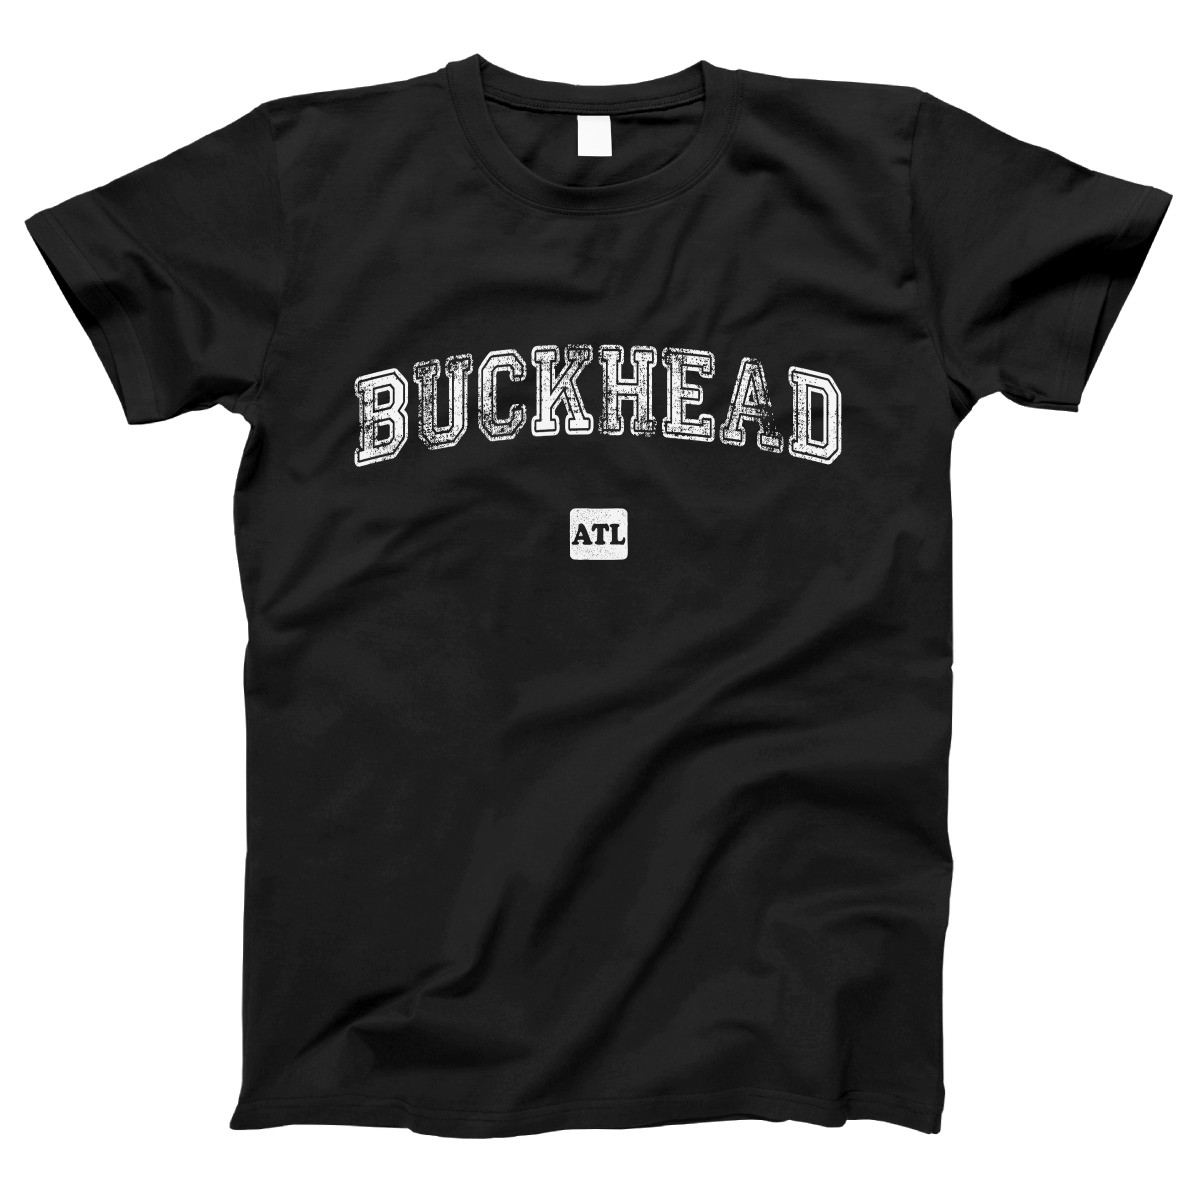 Buckhead ATL Represent Women's T-shirt | Black